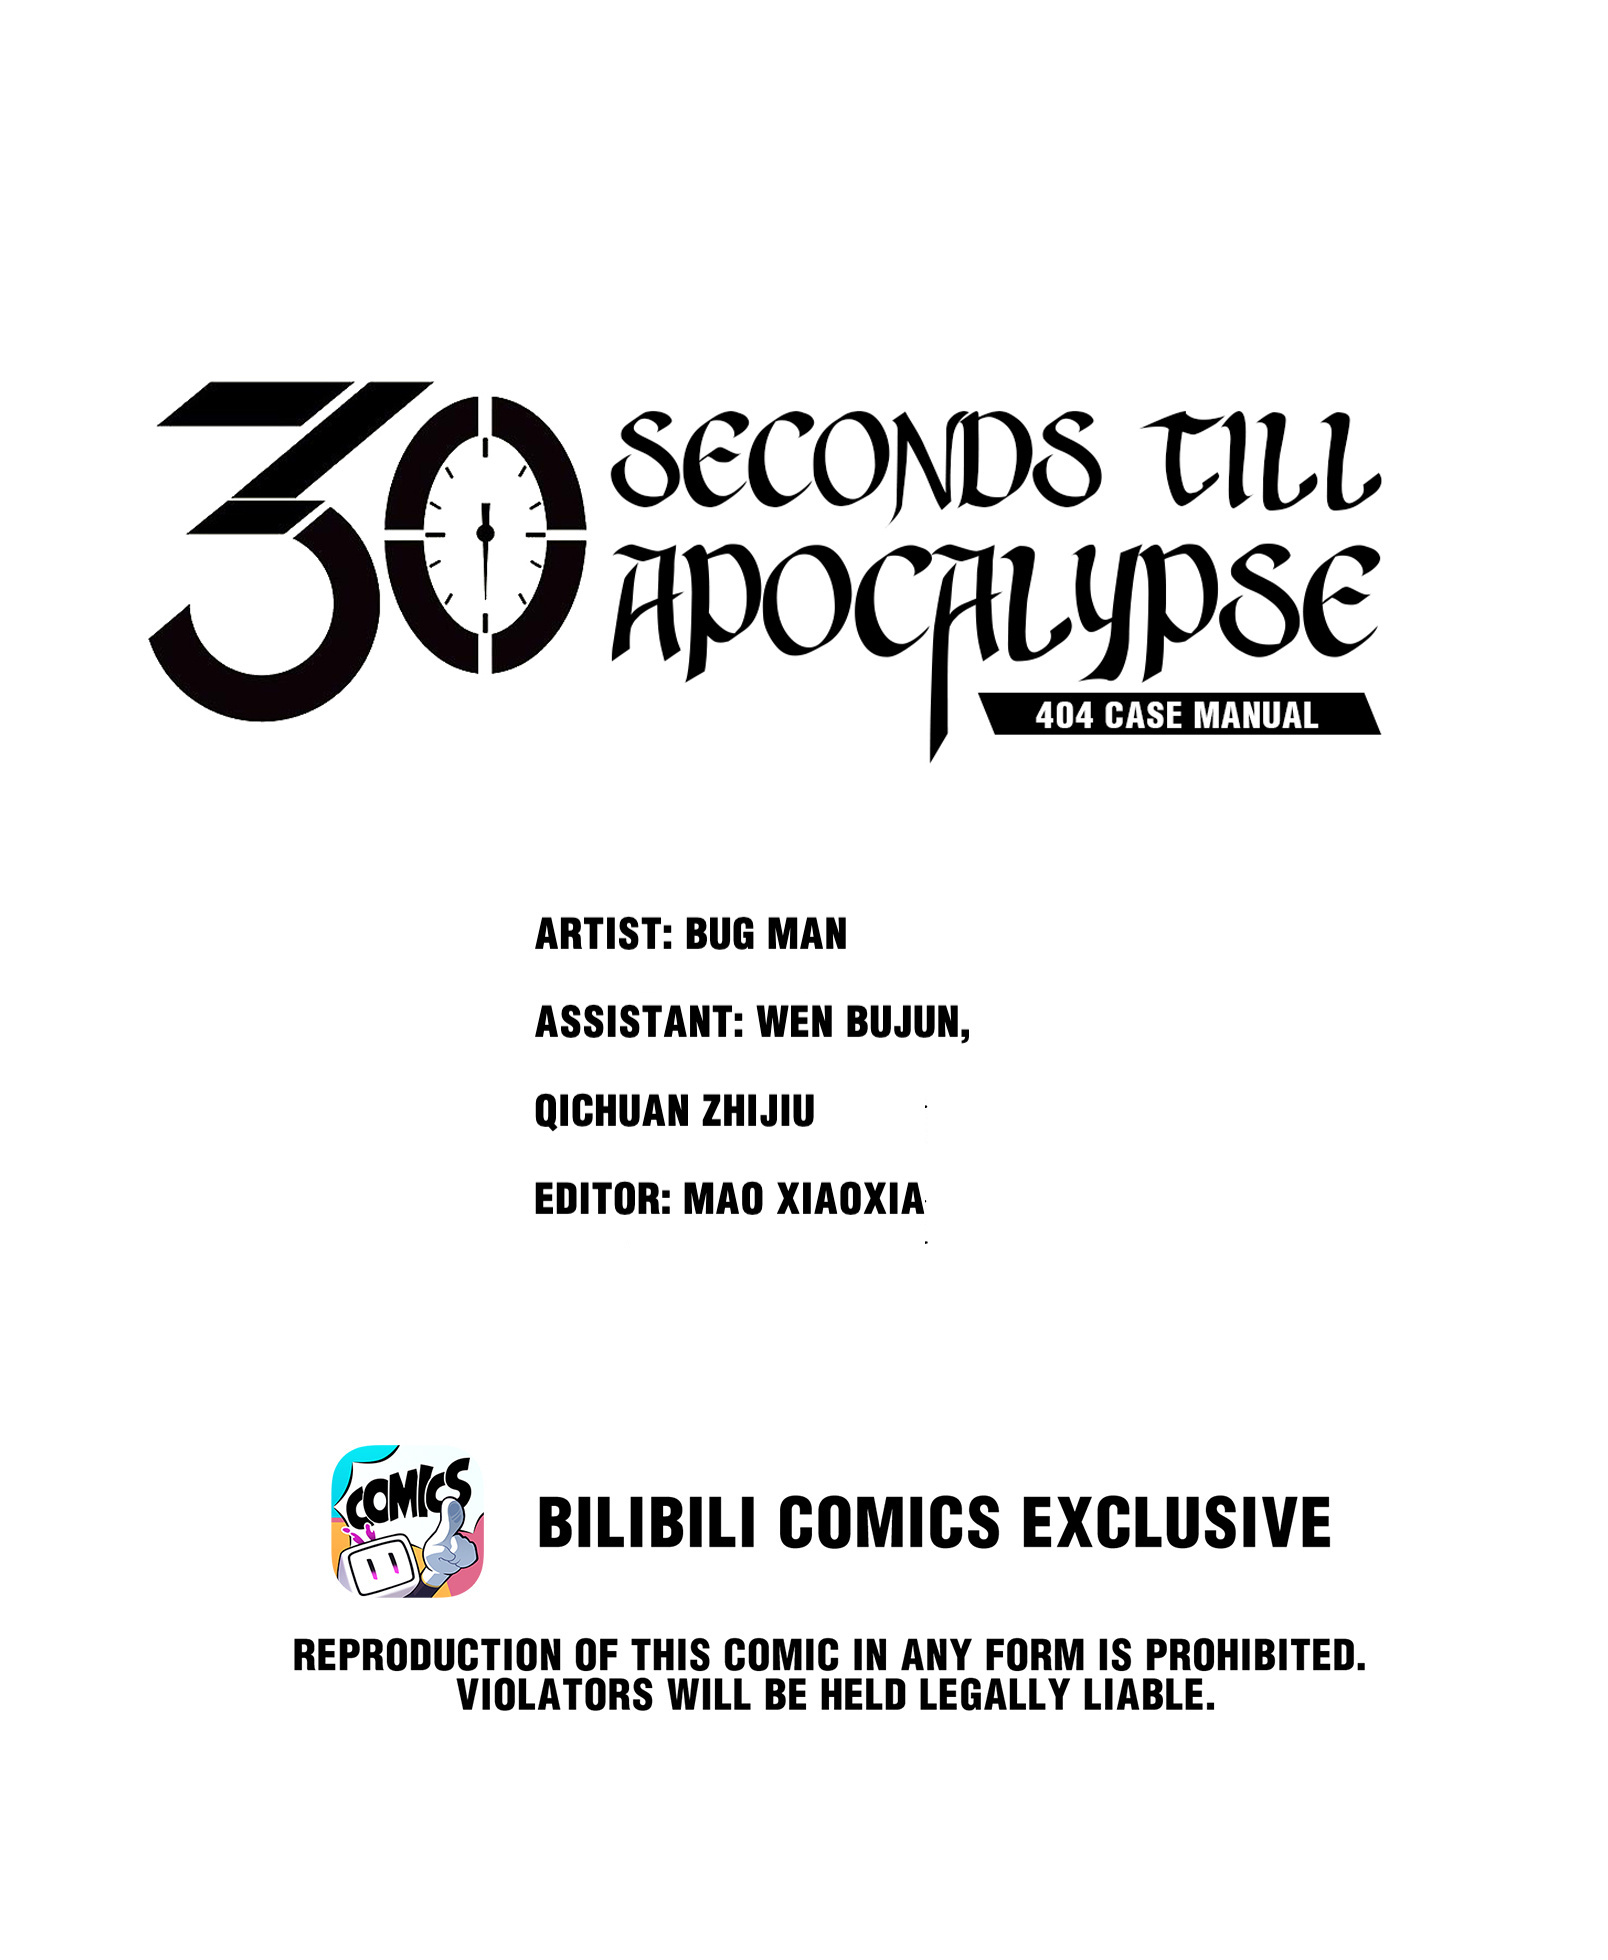 404 Case Manual: 30 Seconds Till Apocalypse - Page 1